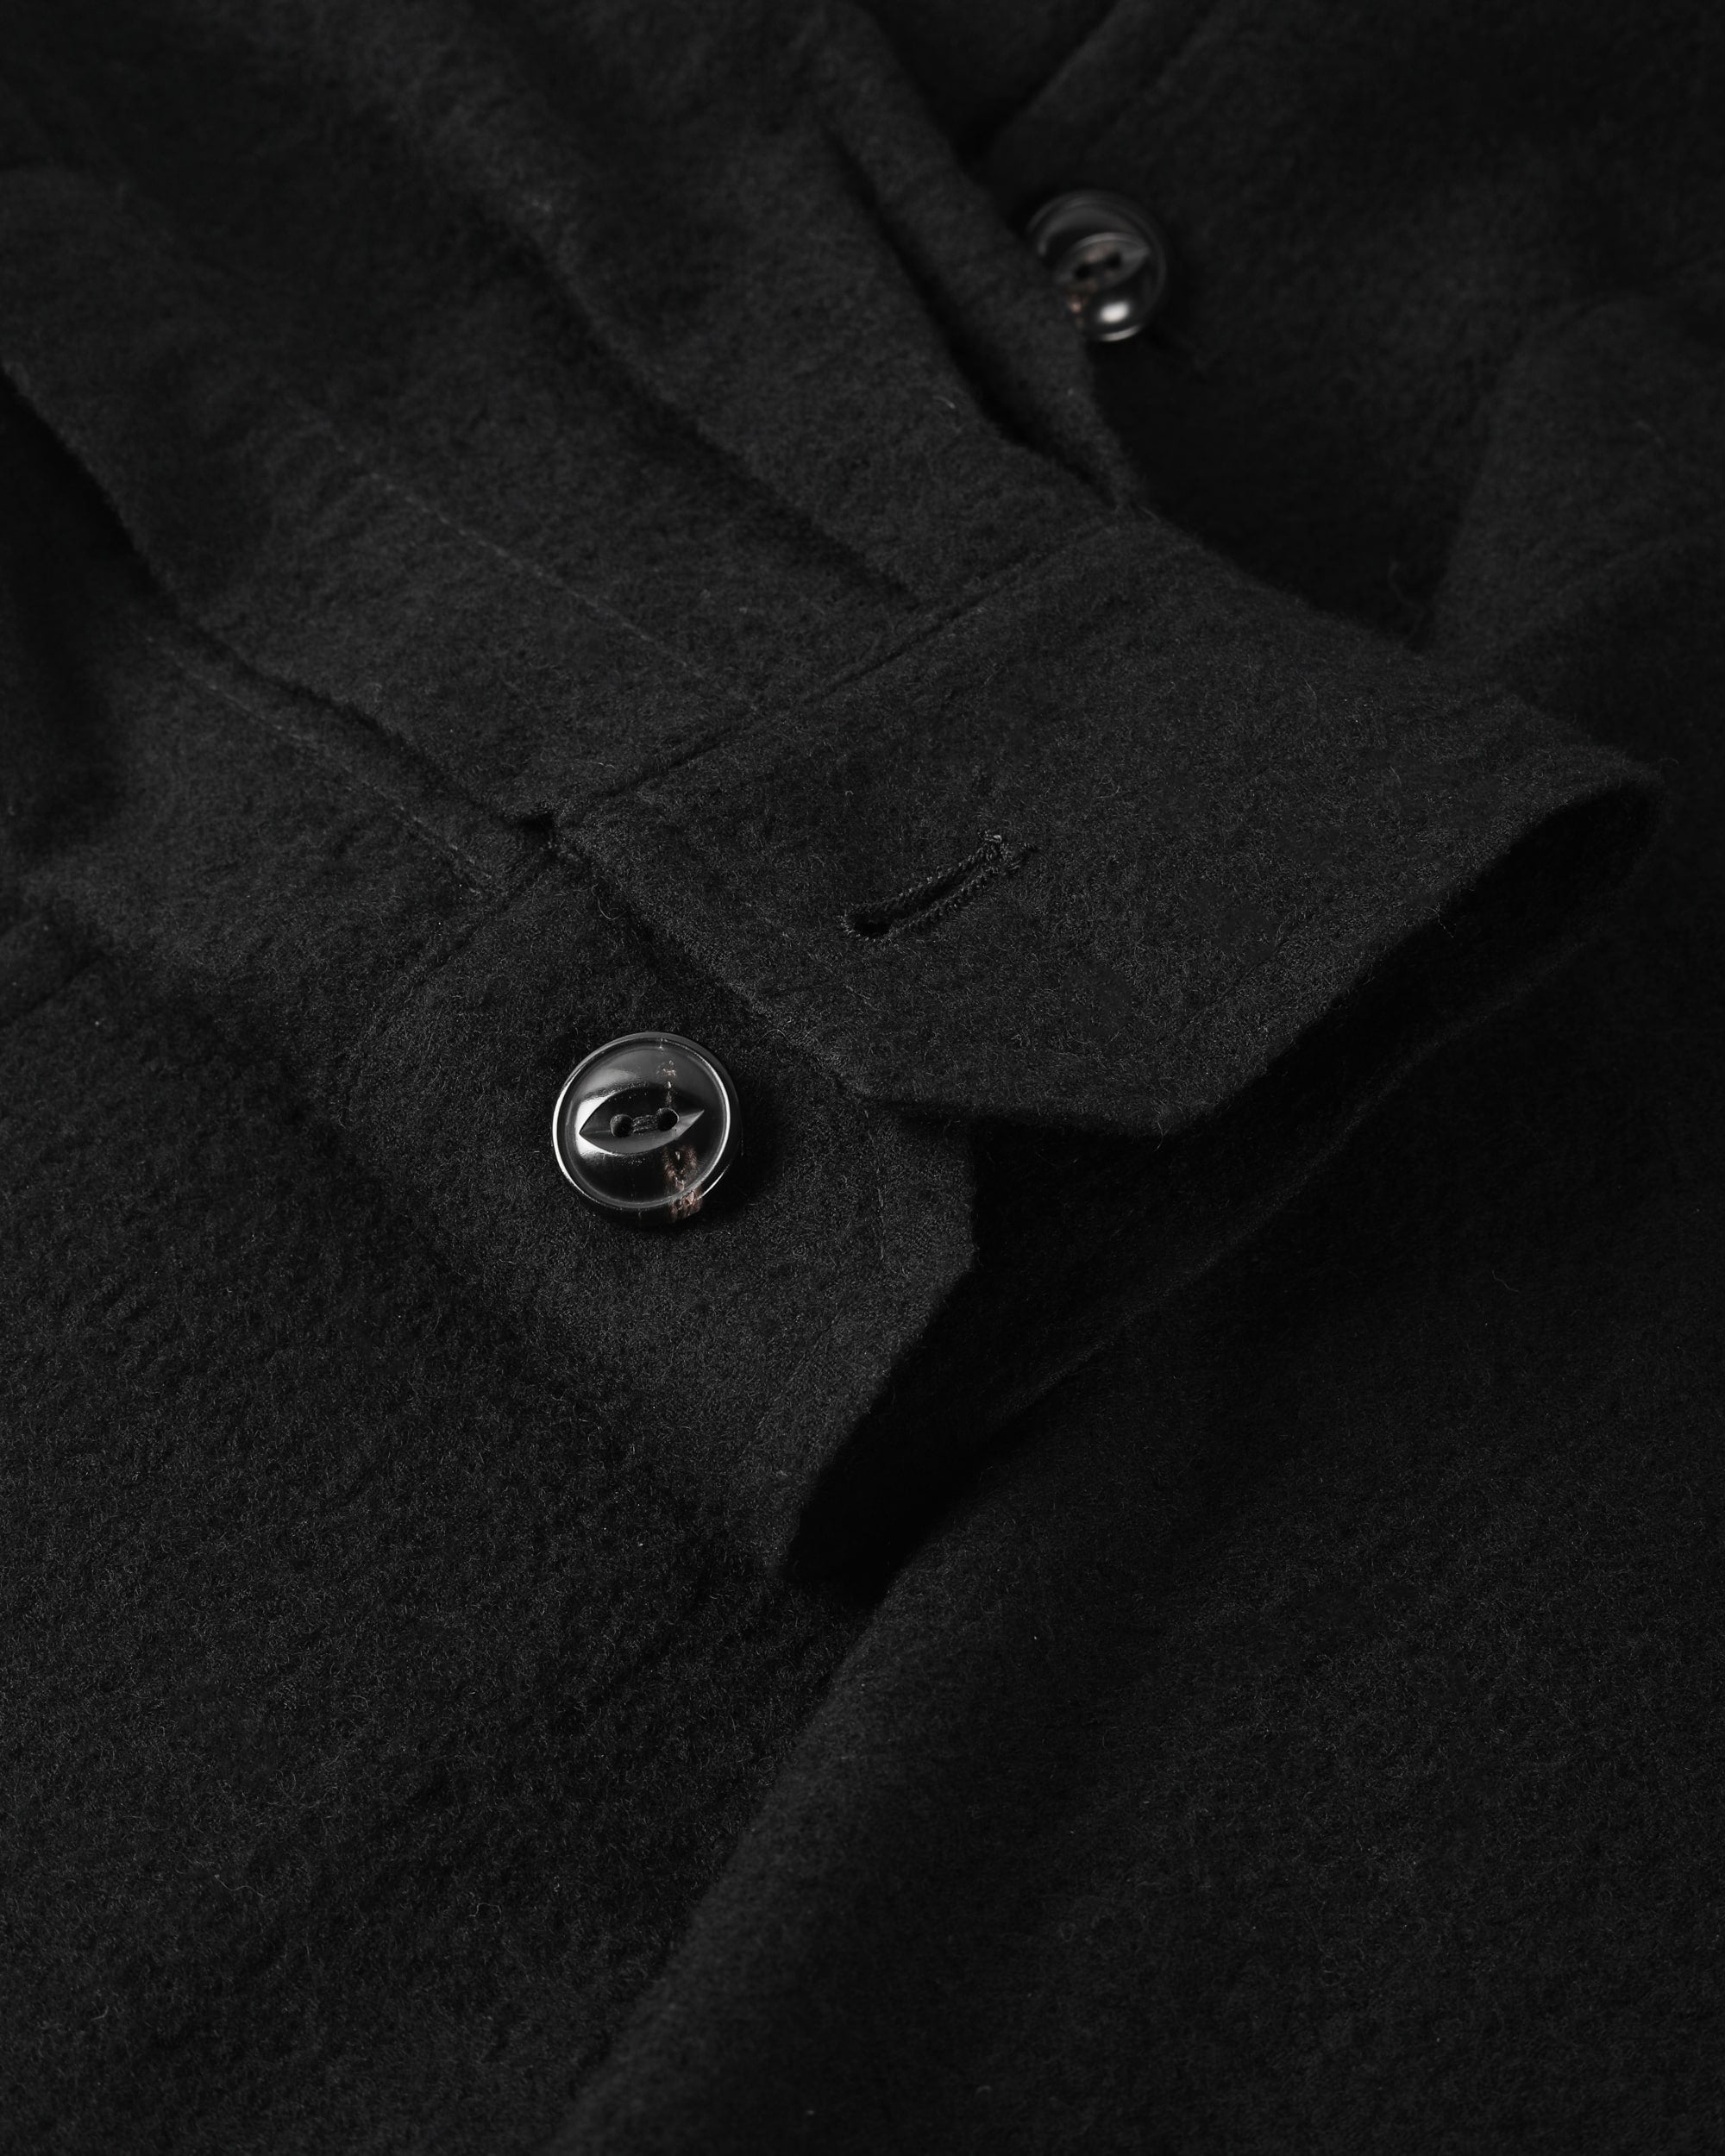 ROSEN Plato Suit in Wool Cotton Gauze